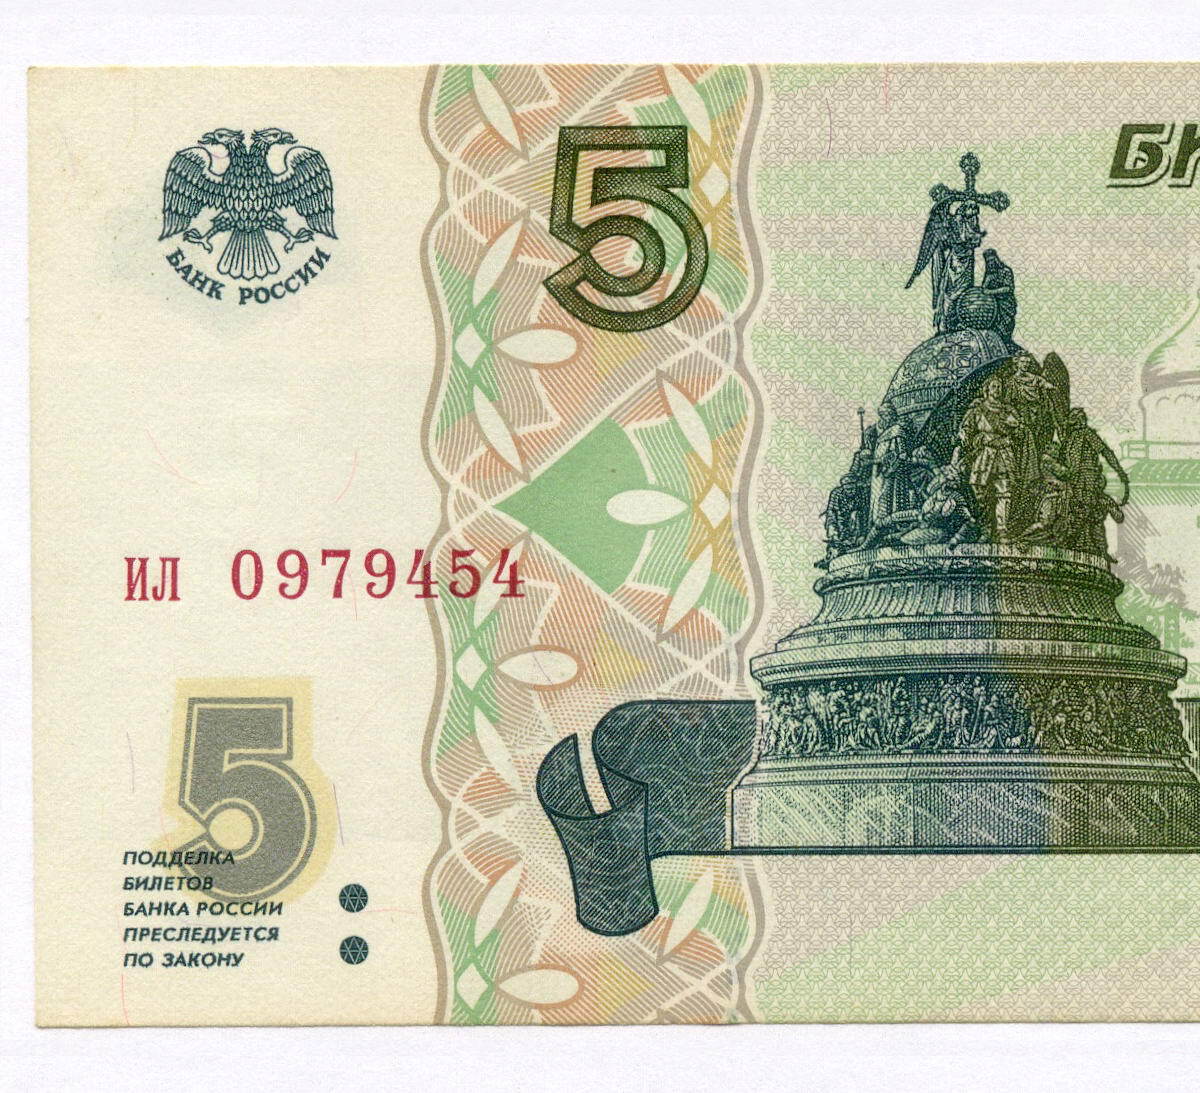 5 бумажные купюры. Пятирублевая купюра. Купюра 5 рублей. 5 Рублевая купюра. Банкнота 5 рублей 1997 года.